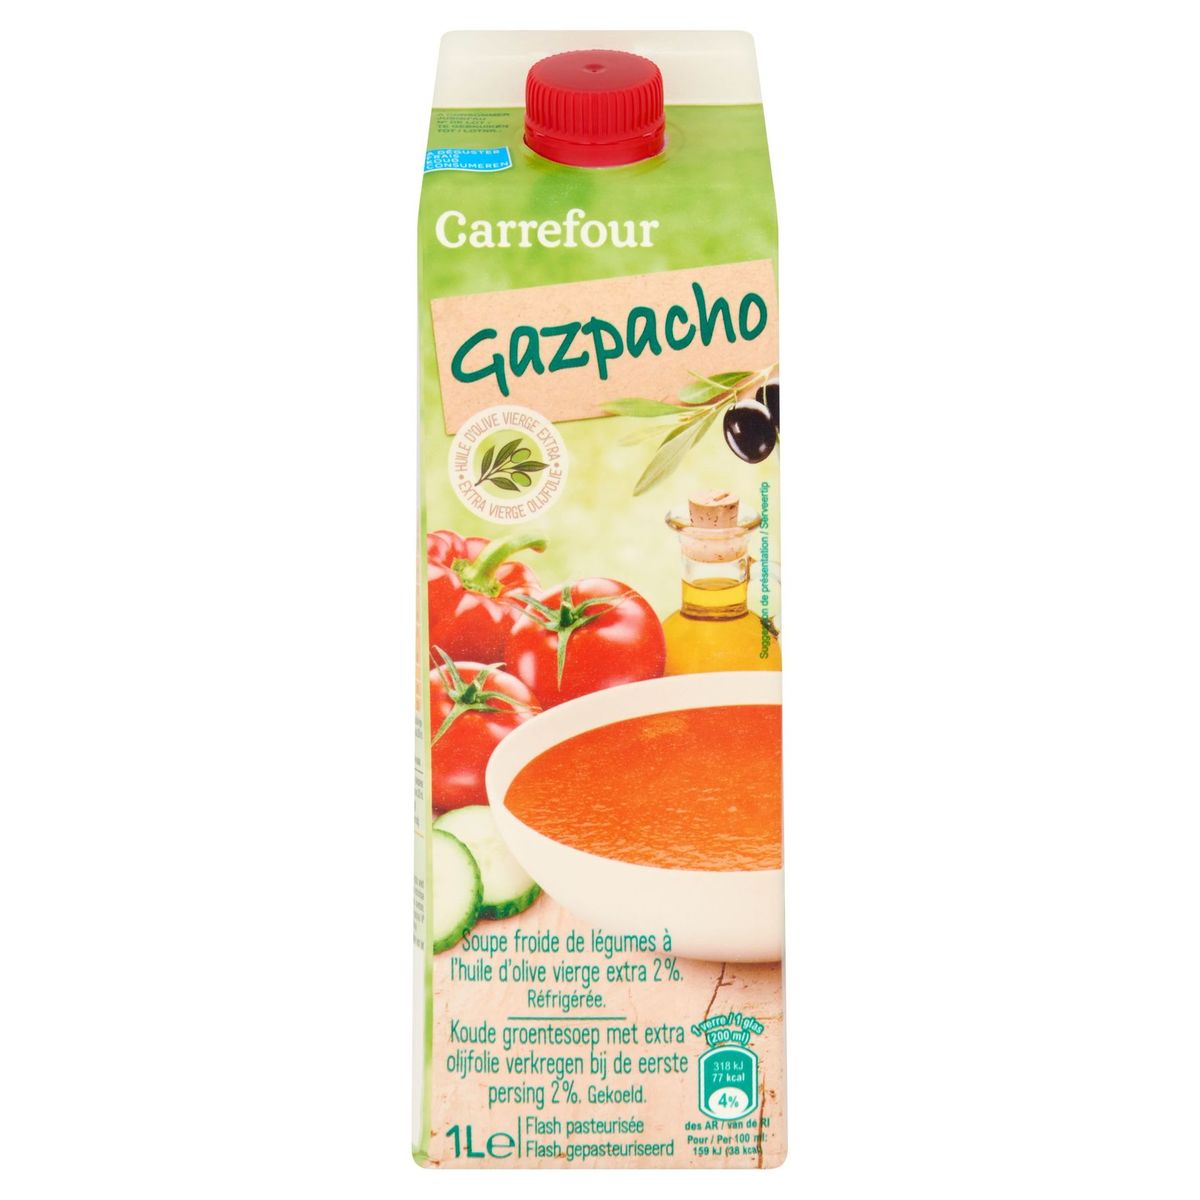 Carrefour Gazpacho 1 L